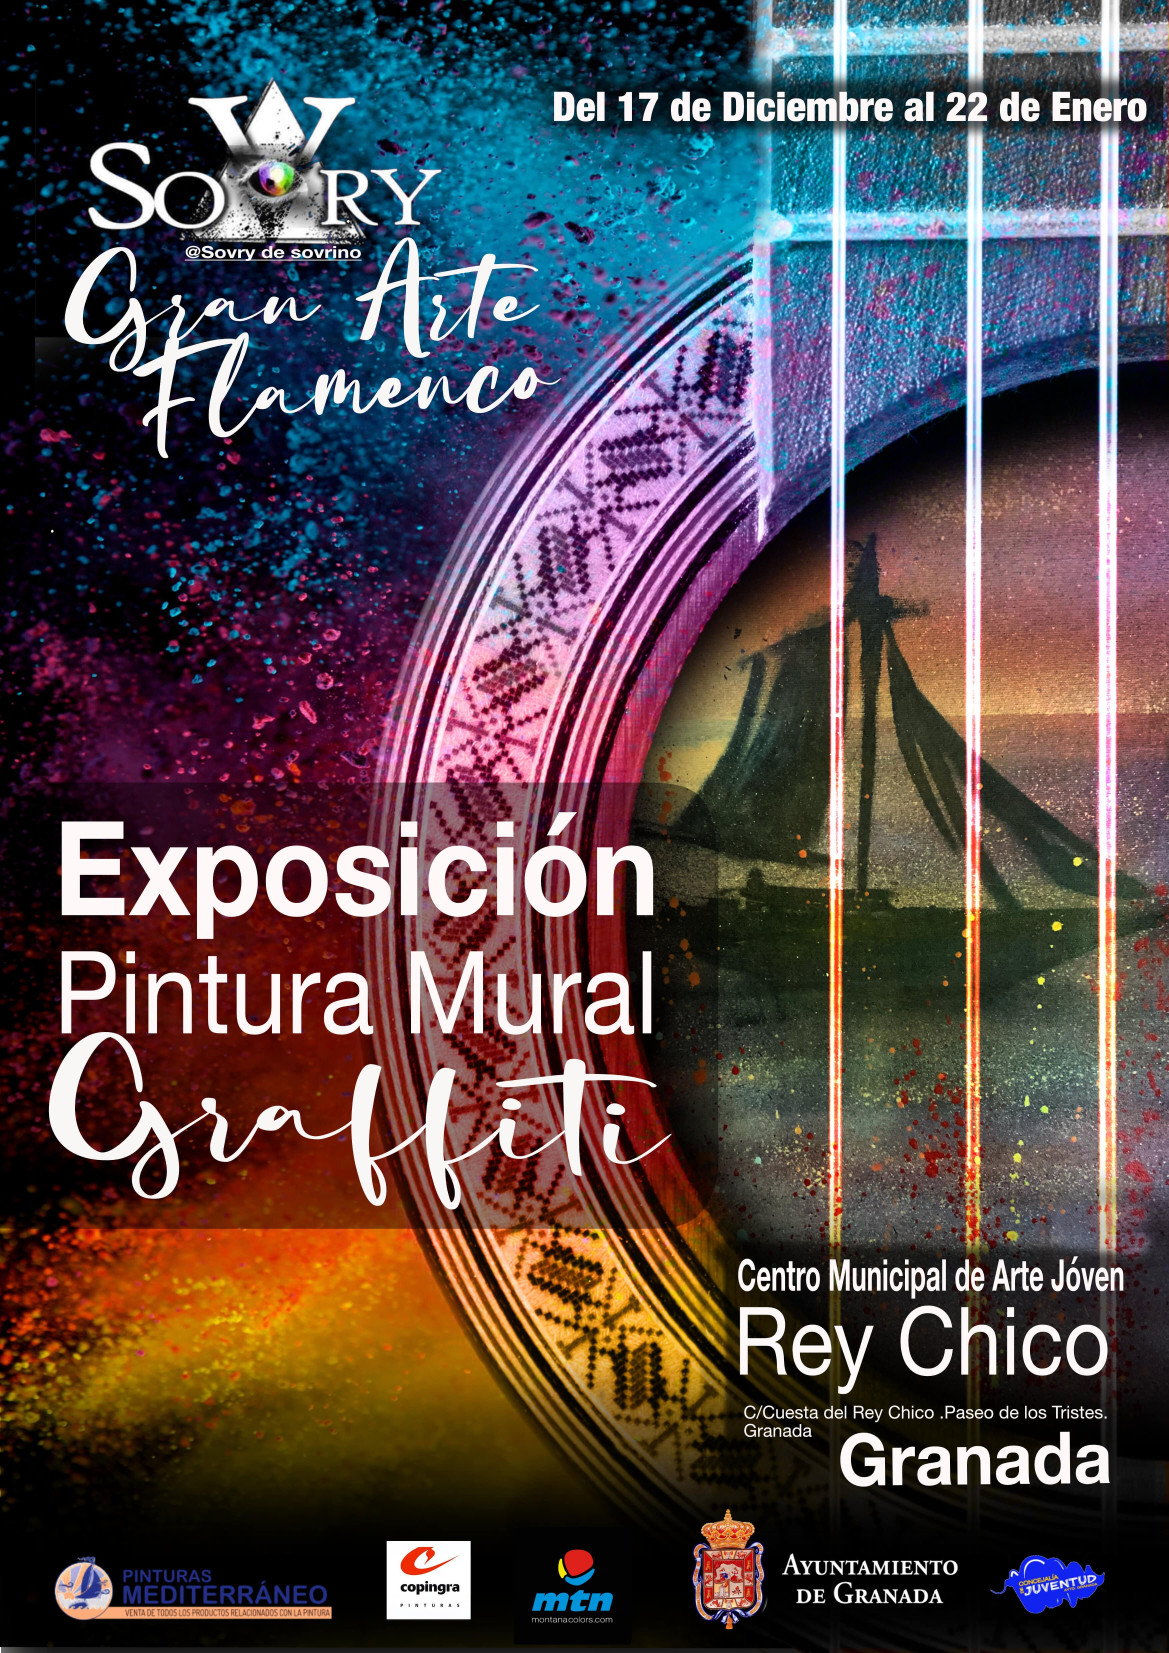 Expo Pintura Mural Graffiti. Rey Chico. 